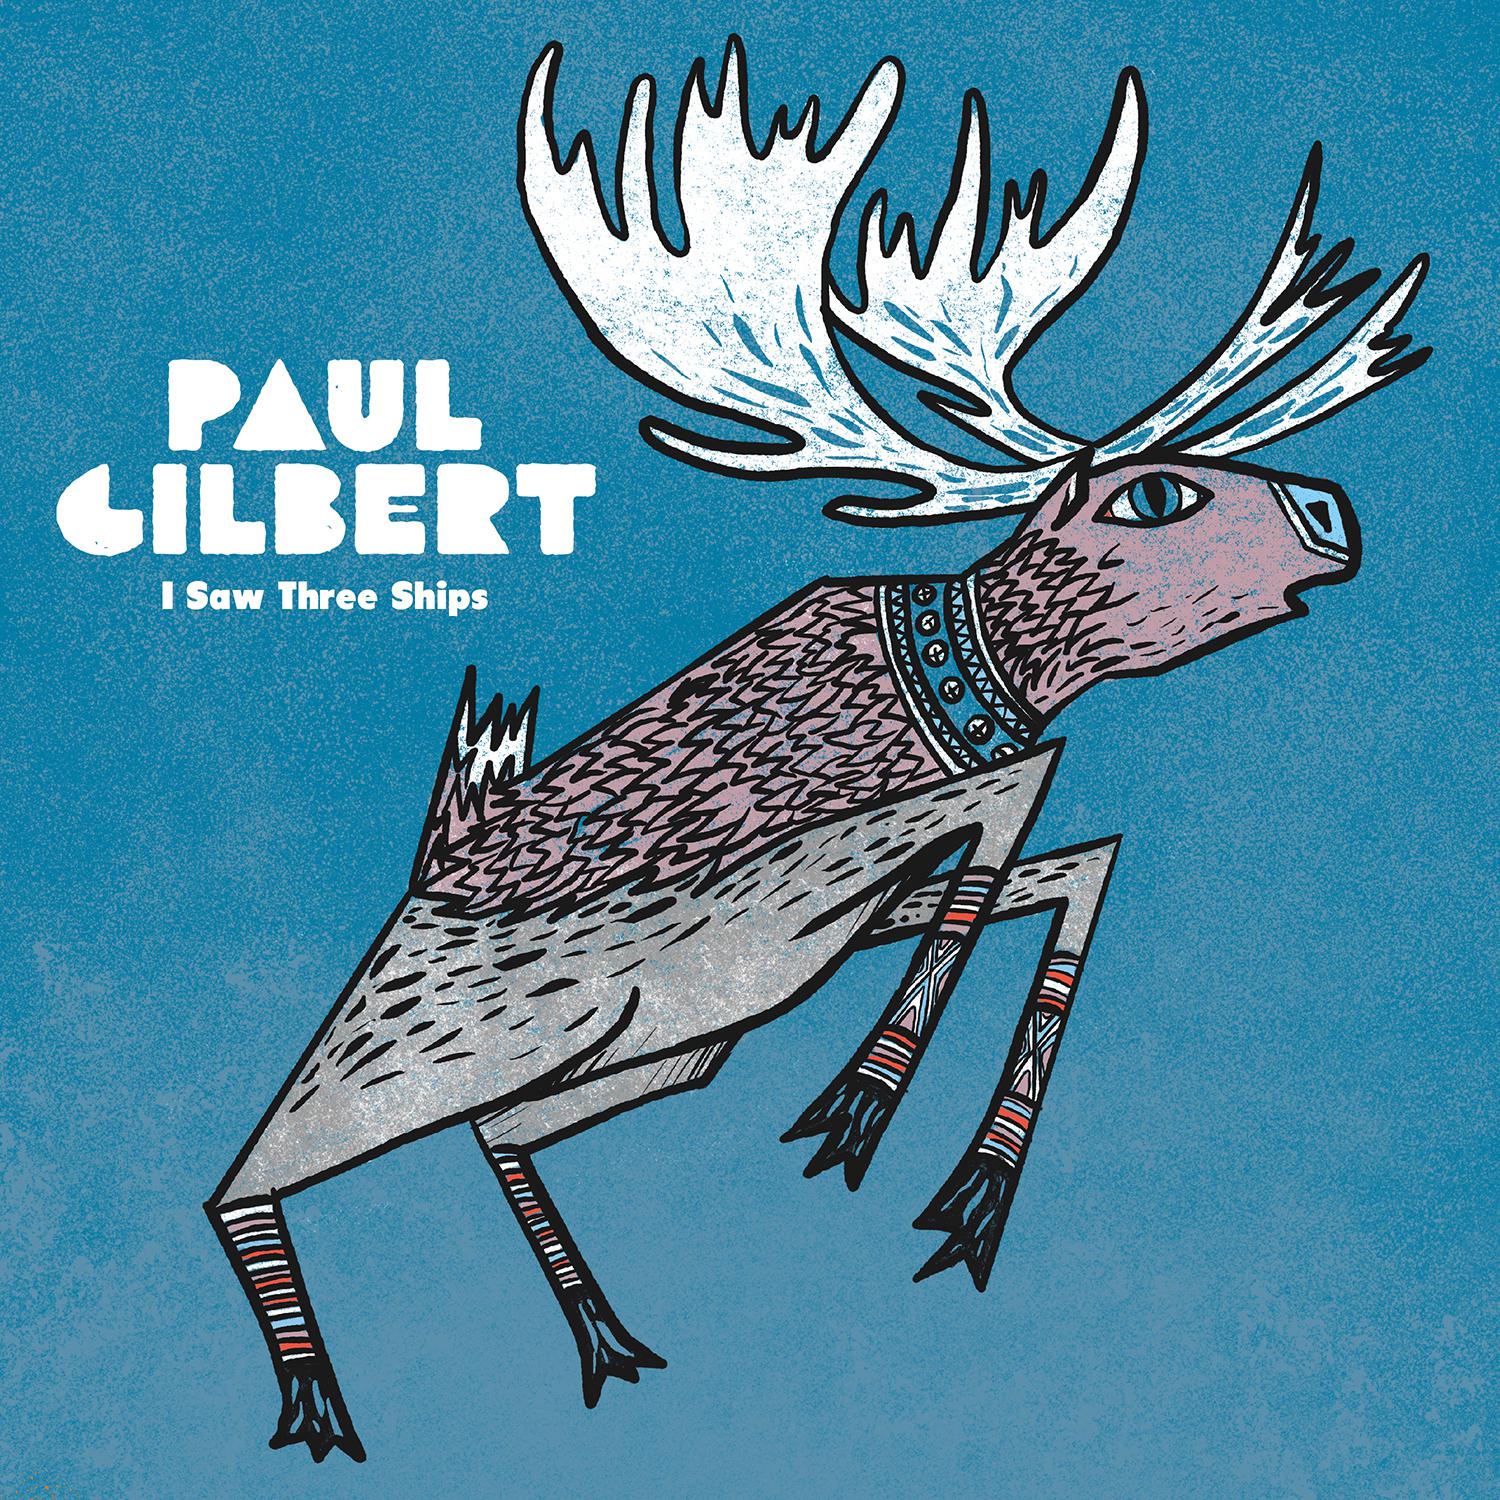 Paul Gilbert - Every Christmas Has Love